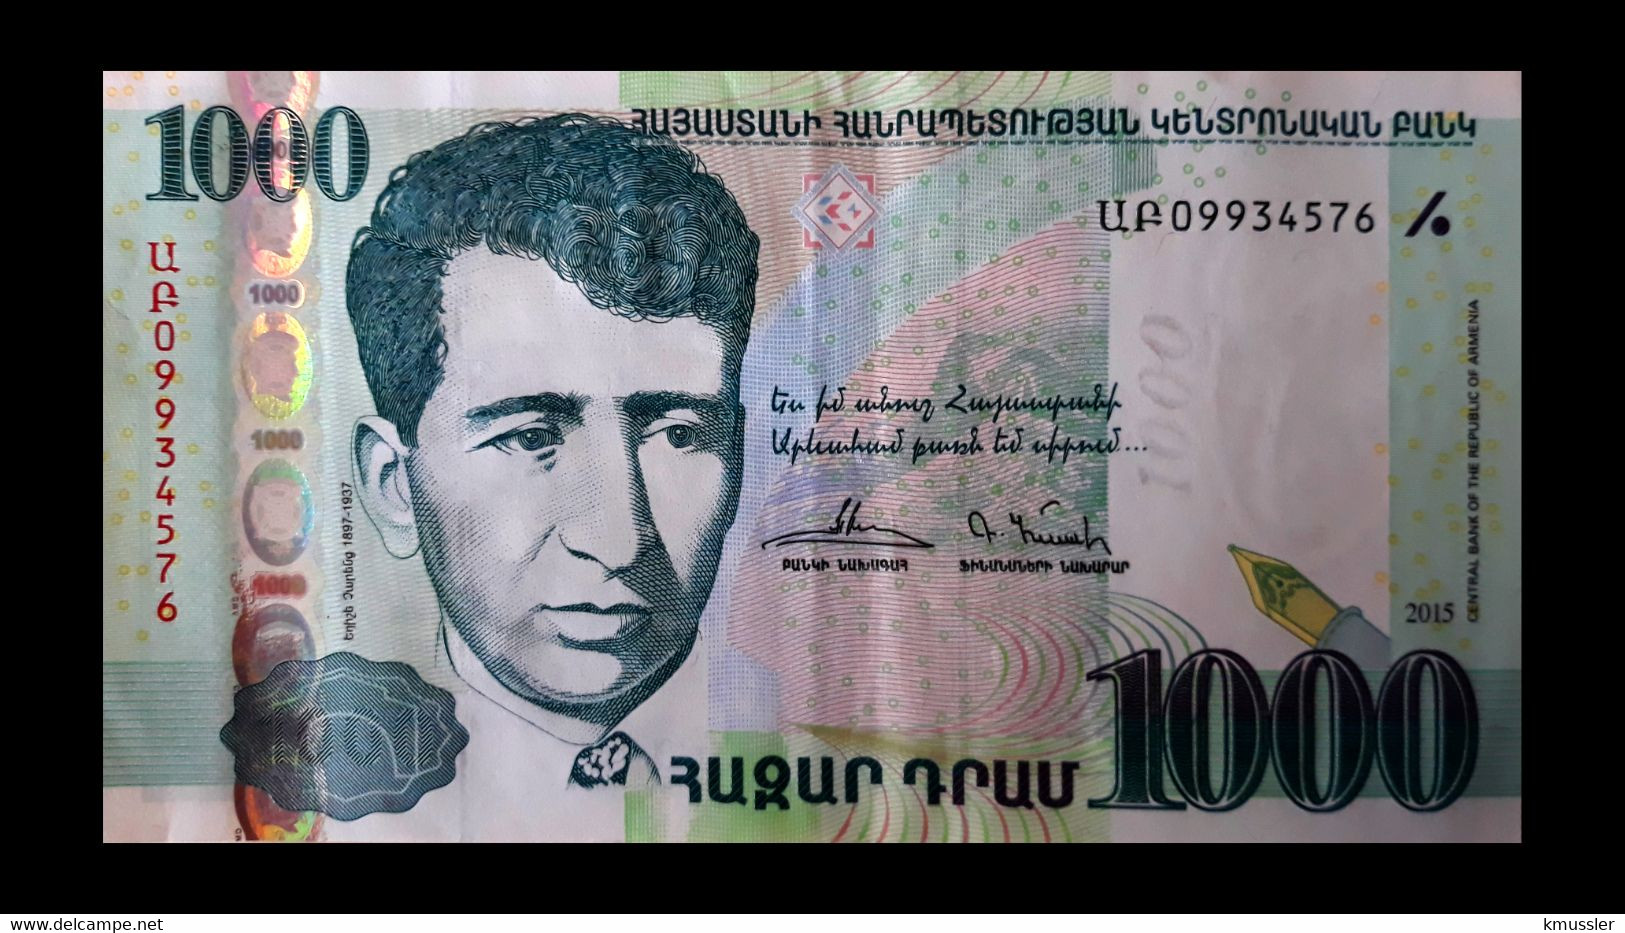 # # # Banknote Aus Armenien 1.000 Dram AU # # # - Armenia